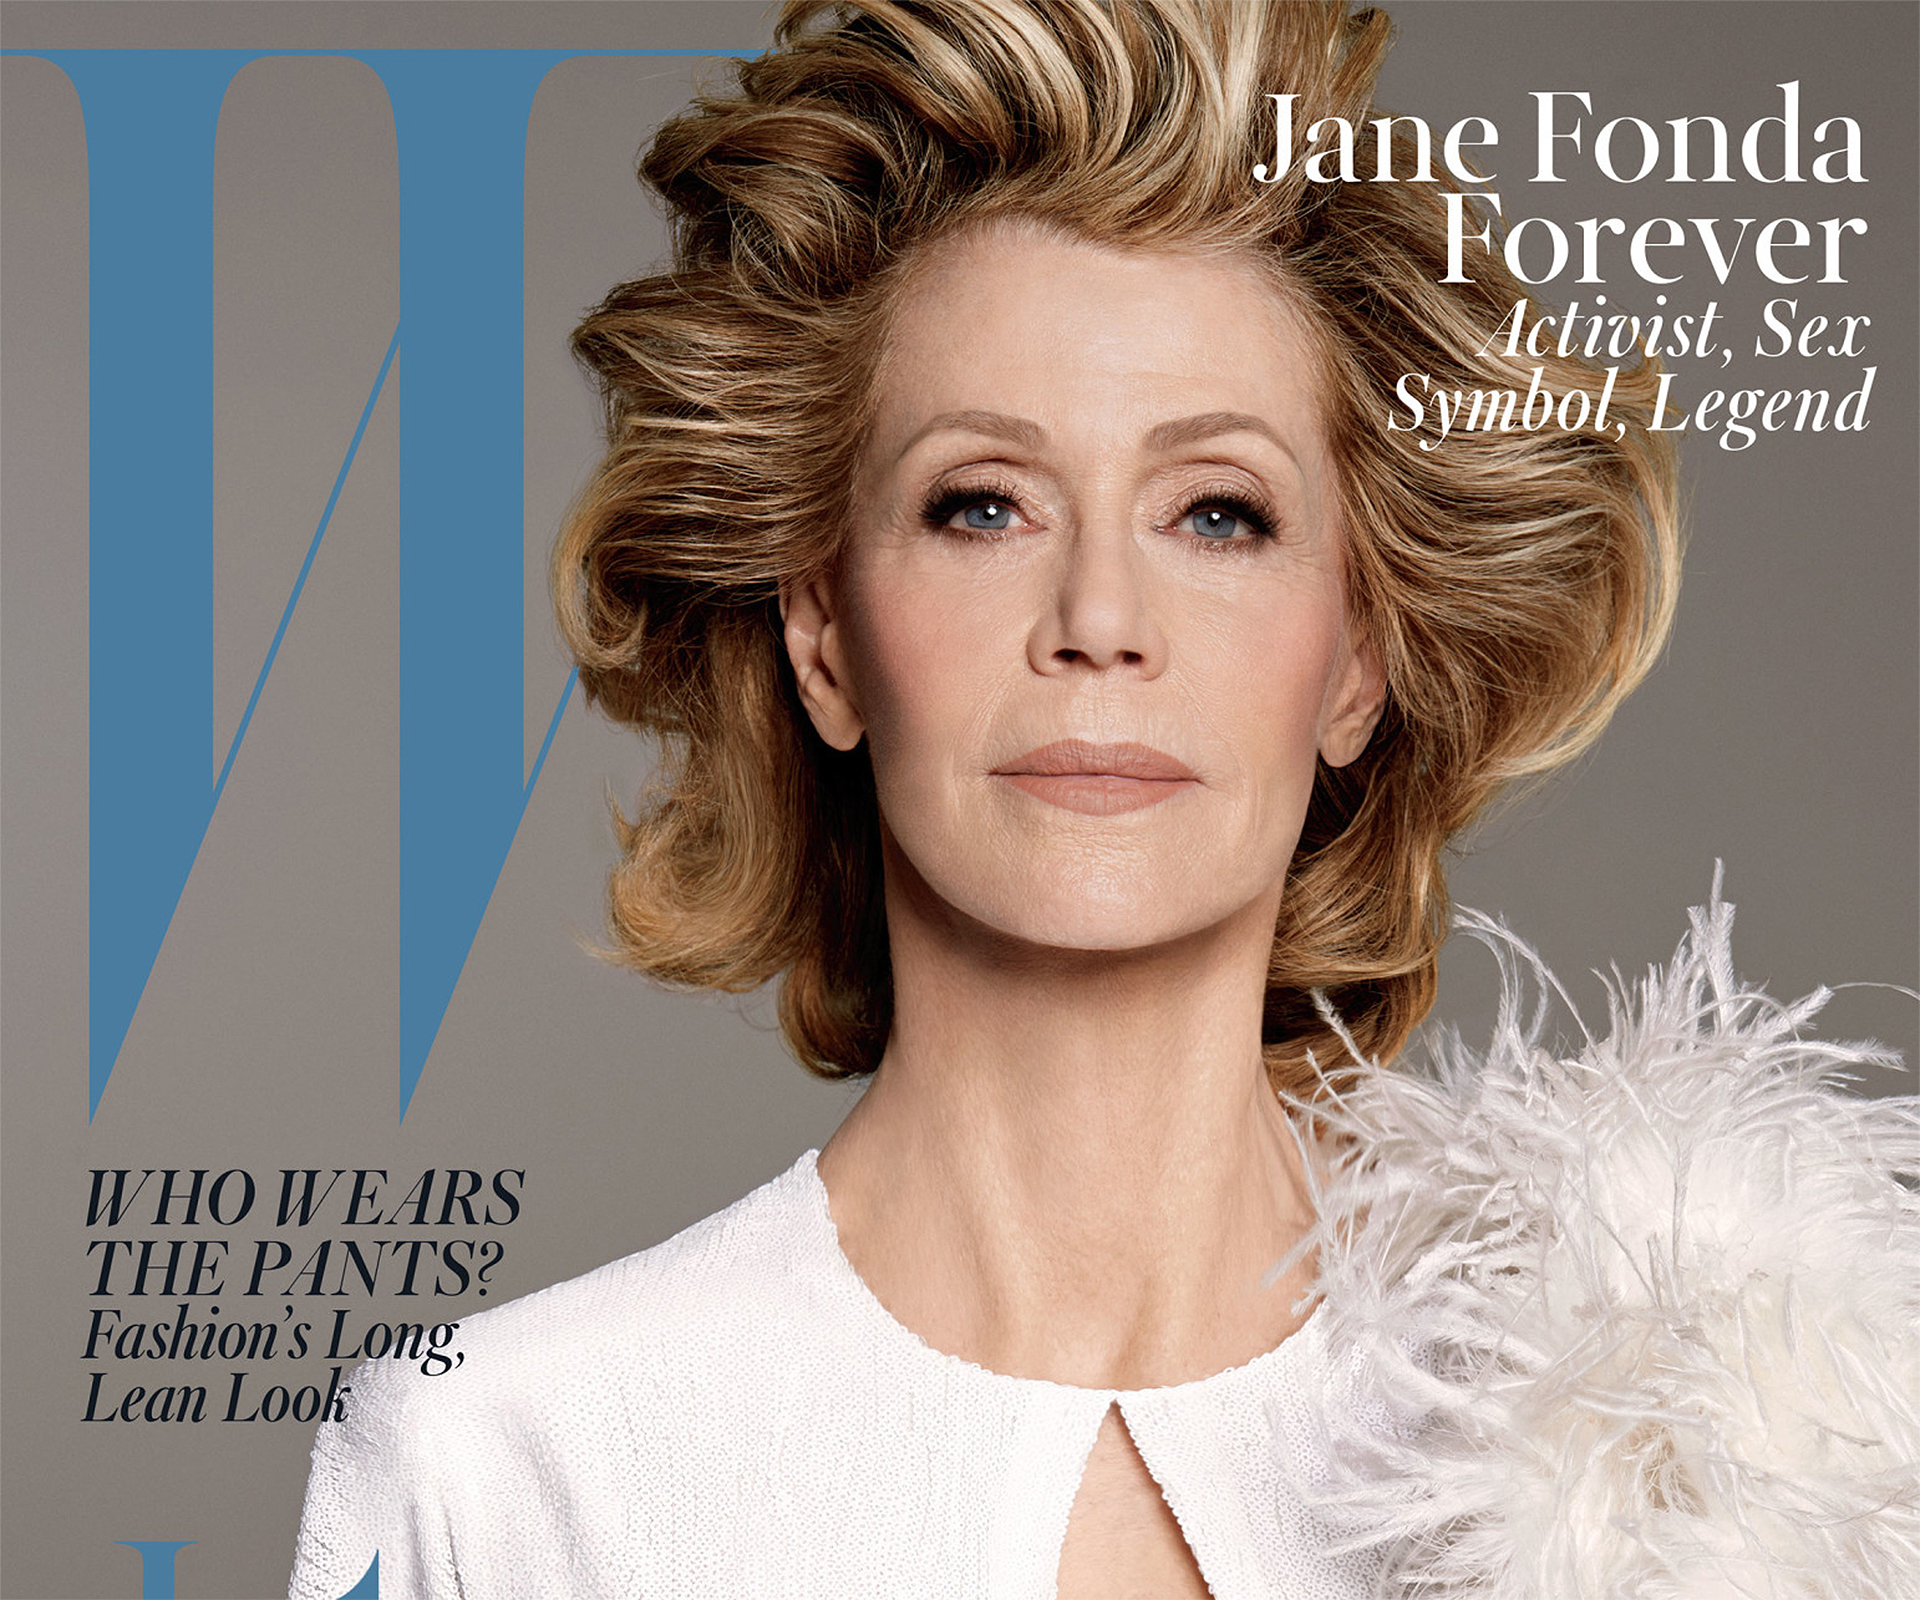 Jane Fonda at 77: “I’ve always had a good bum”